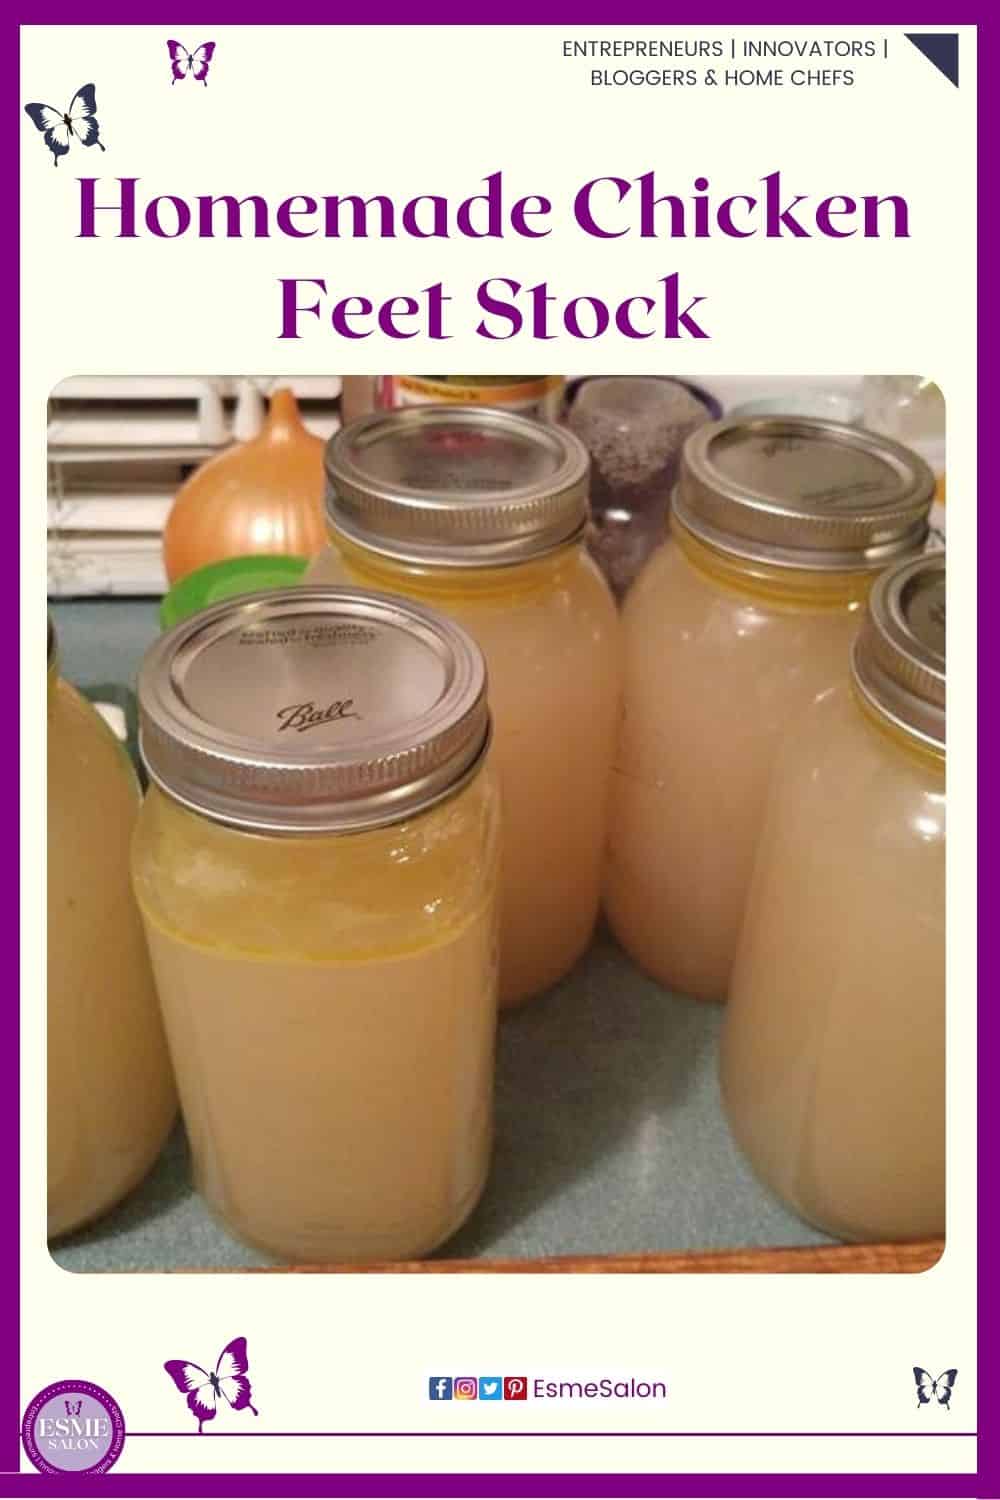 an image of bottled Homemade Chicken Feet Stock